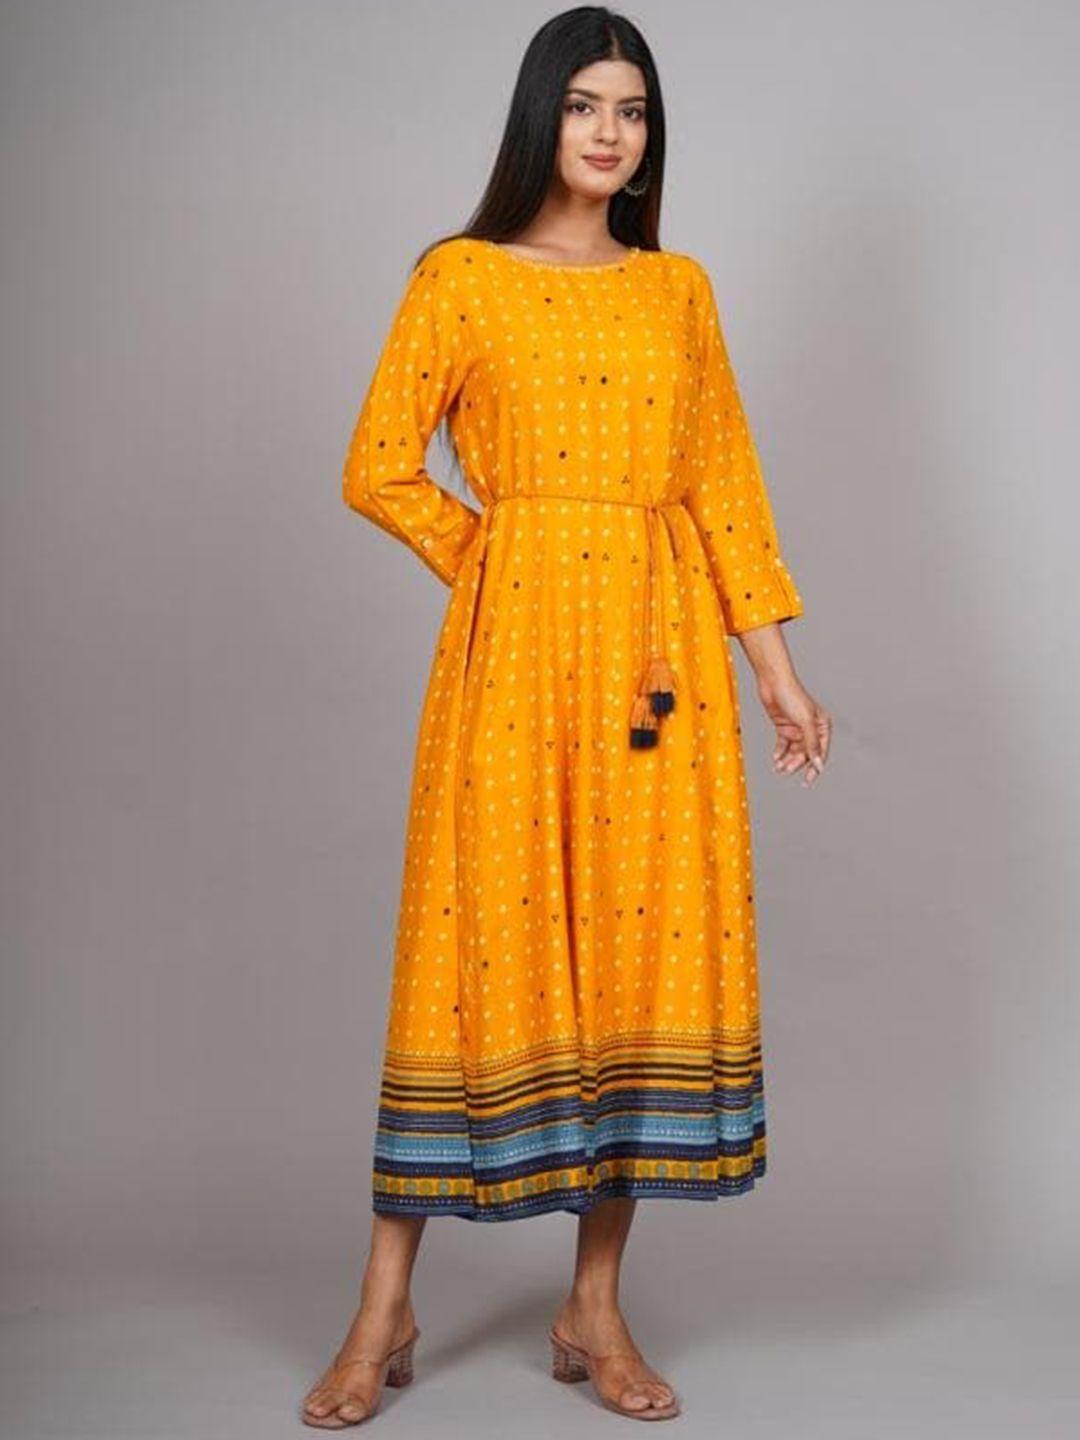 here&now women plus size mustard yellow & white printed maxi ethnic dresses